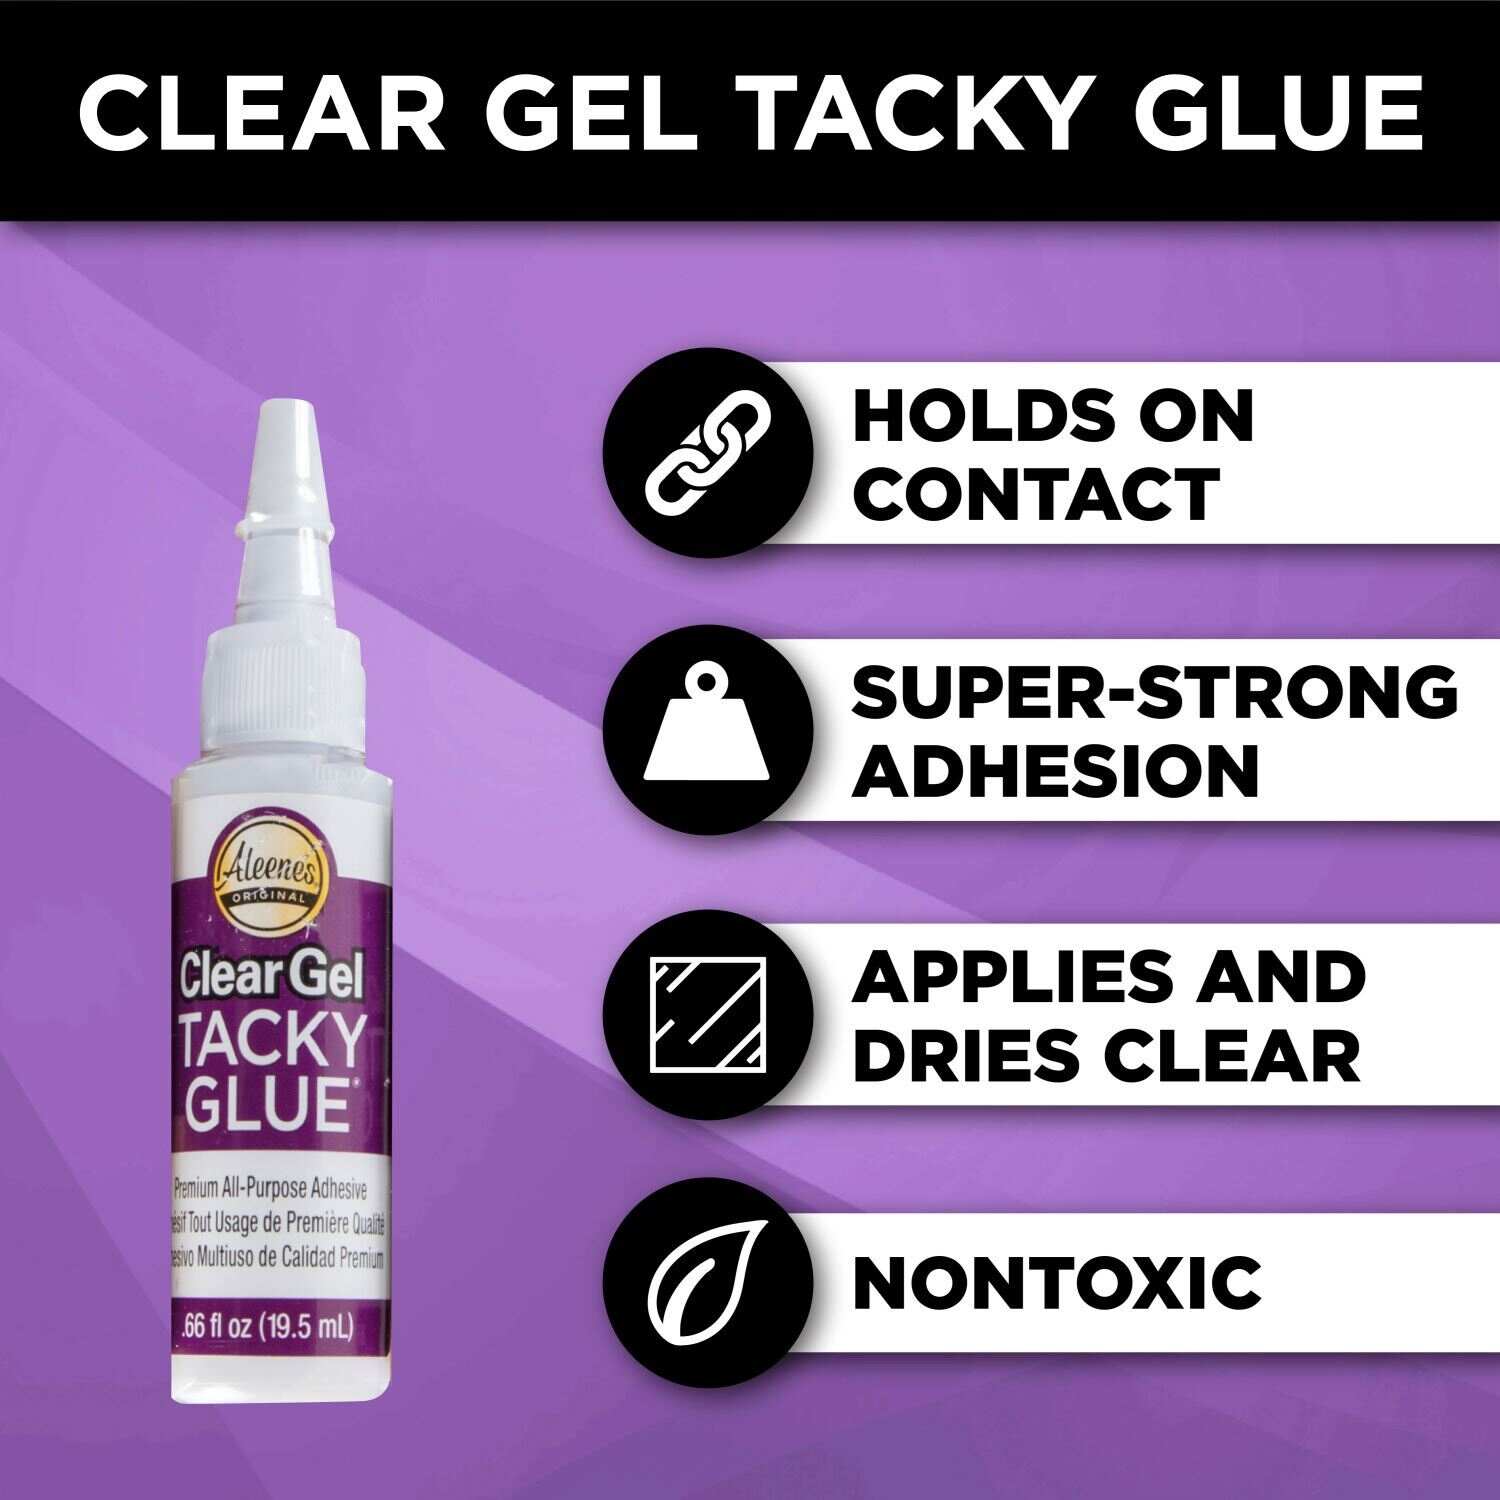 Aleene's Tacky Glue - Variety Pack, Pkg of 3